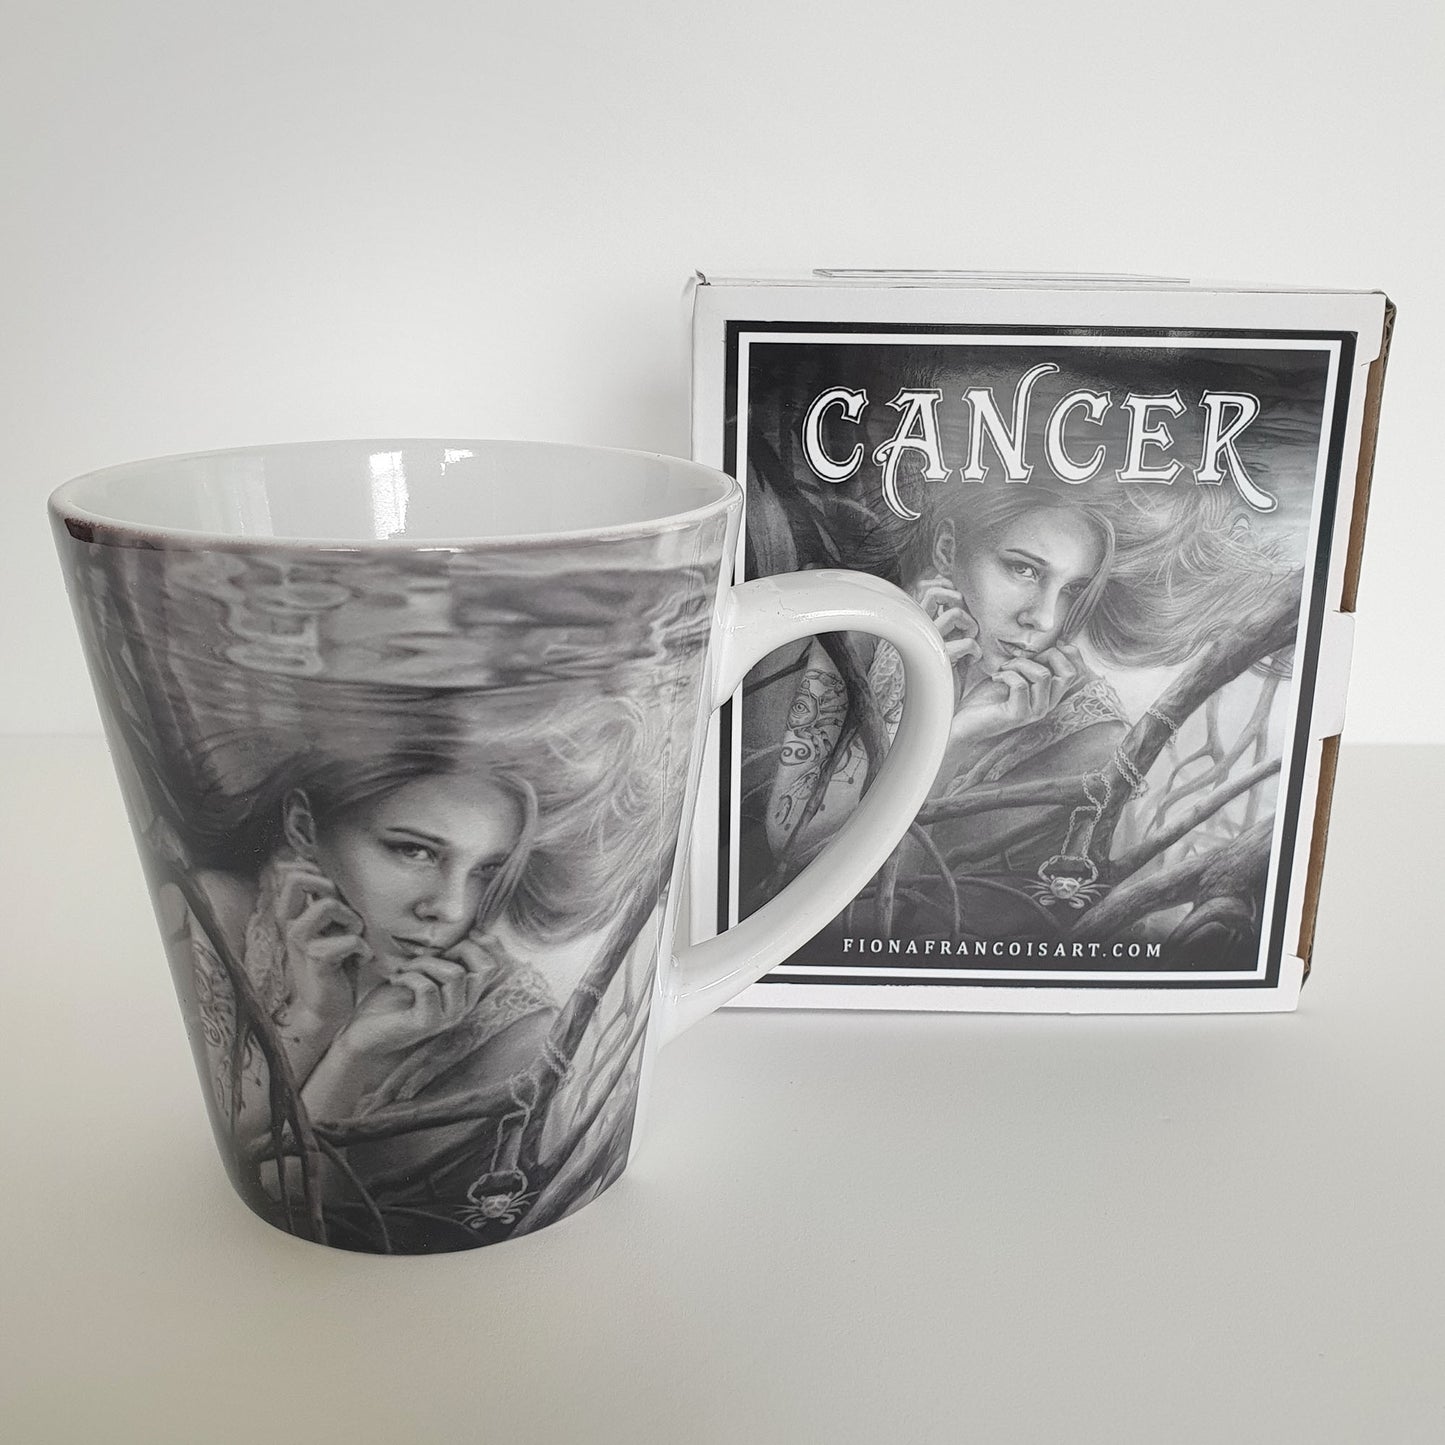 'Cancer' ceramic mug